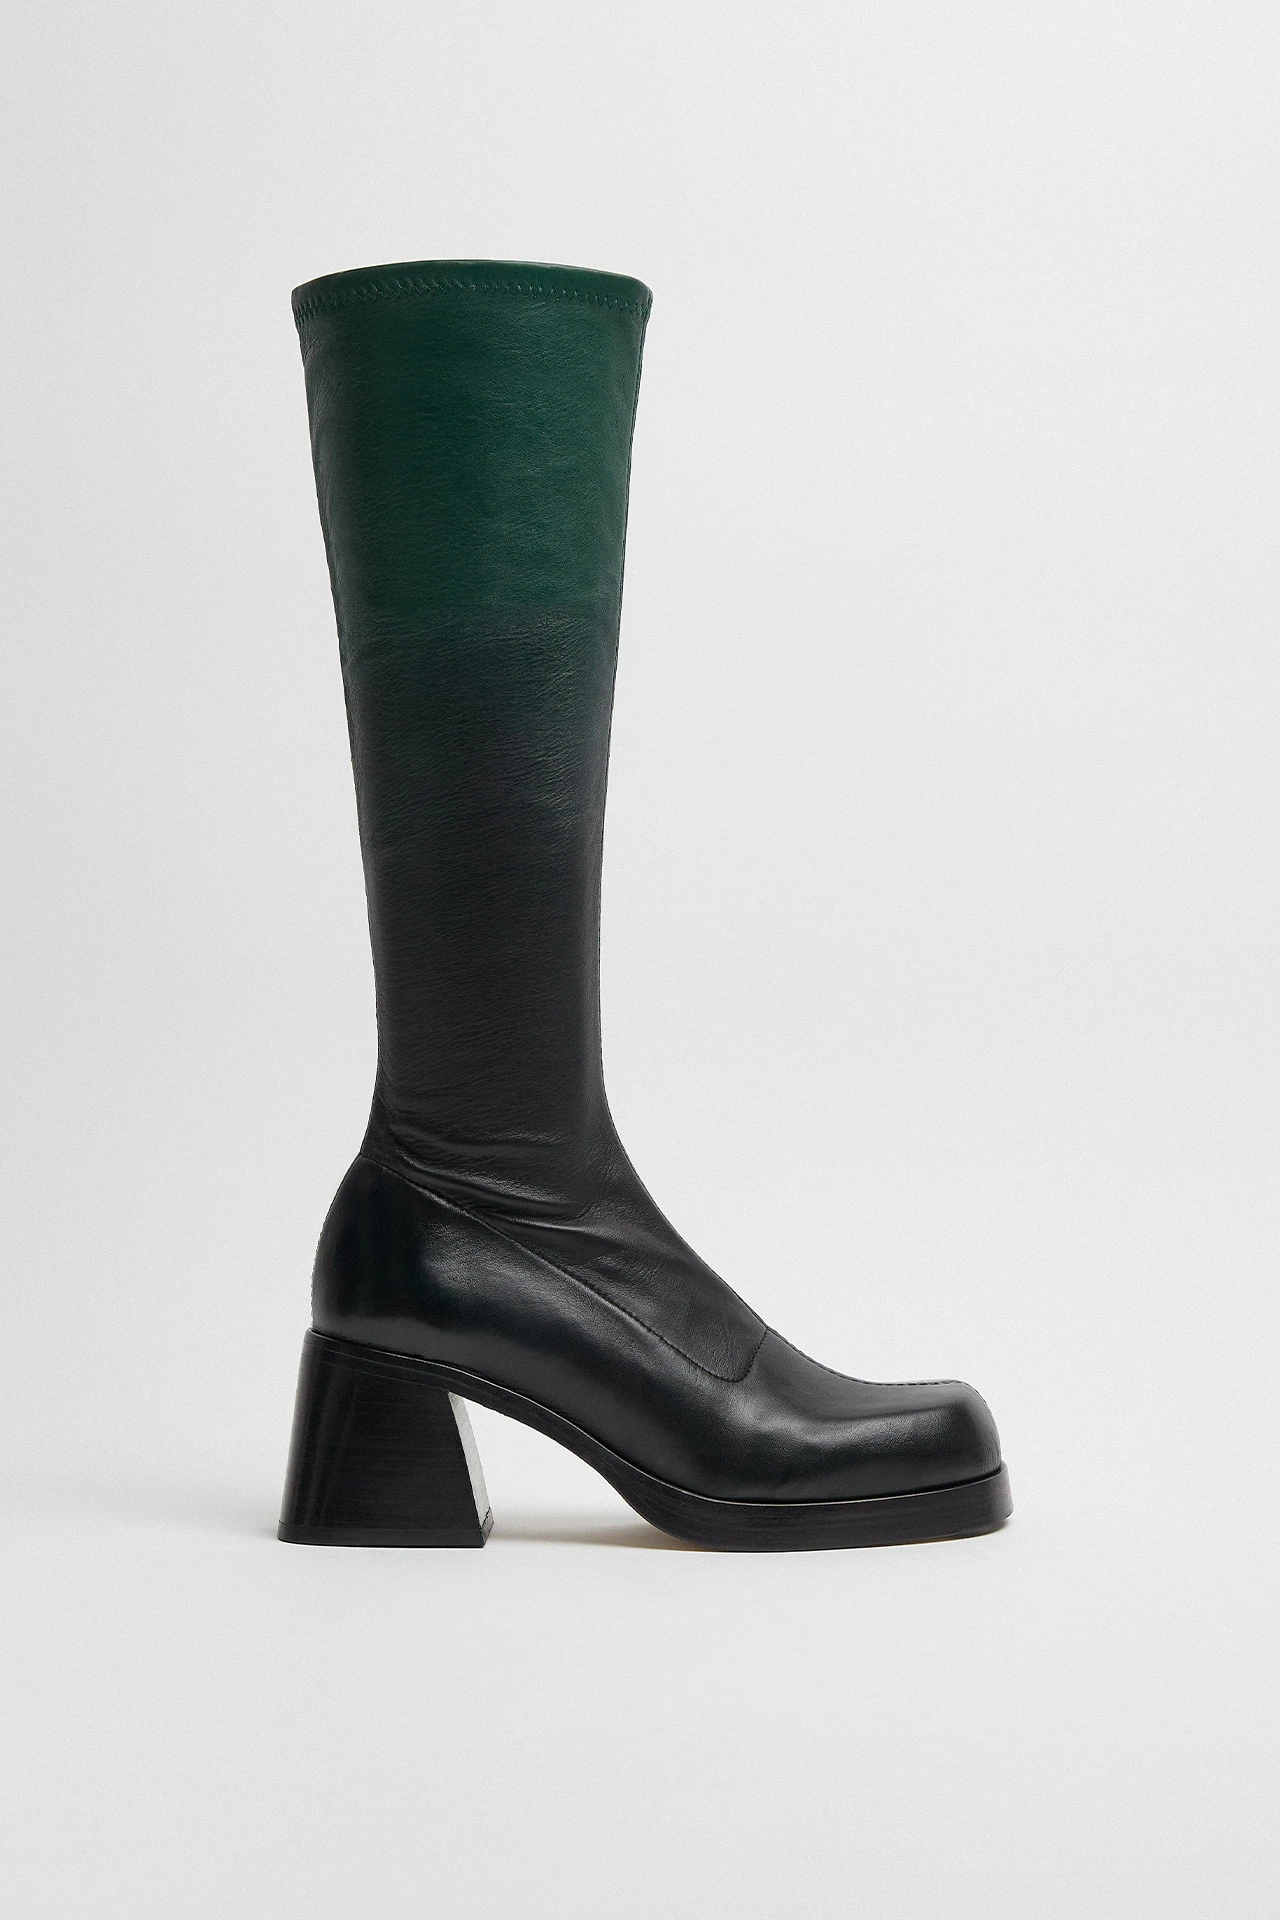 Miista-hedy-black-green-degrade-boots-01